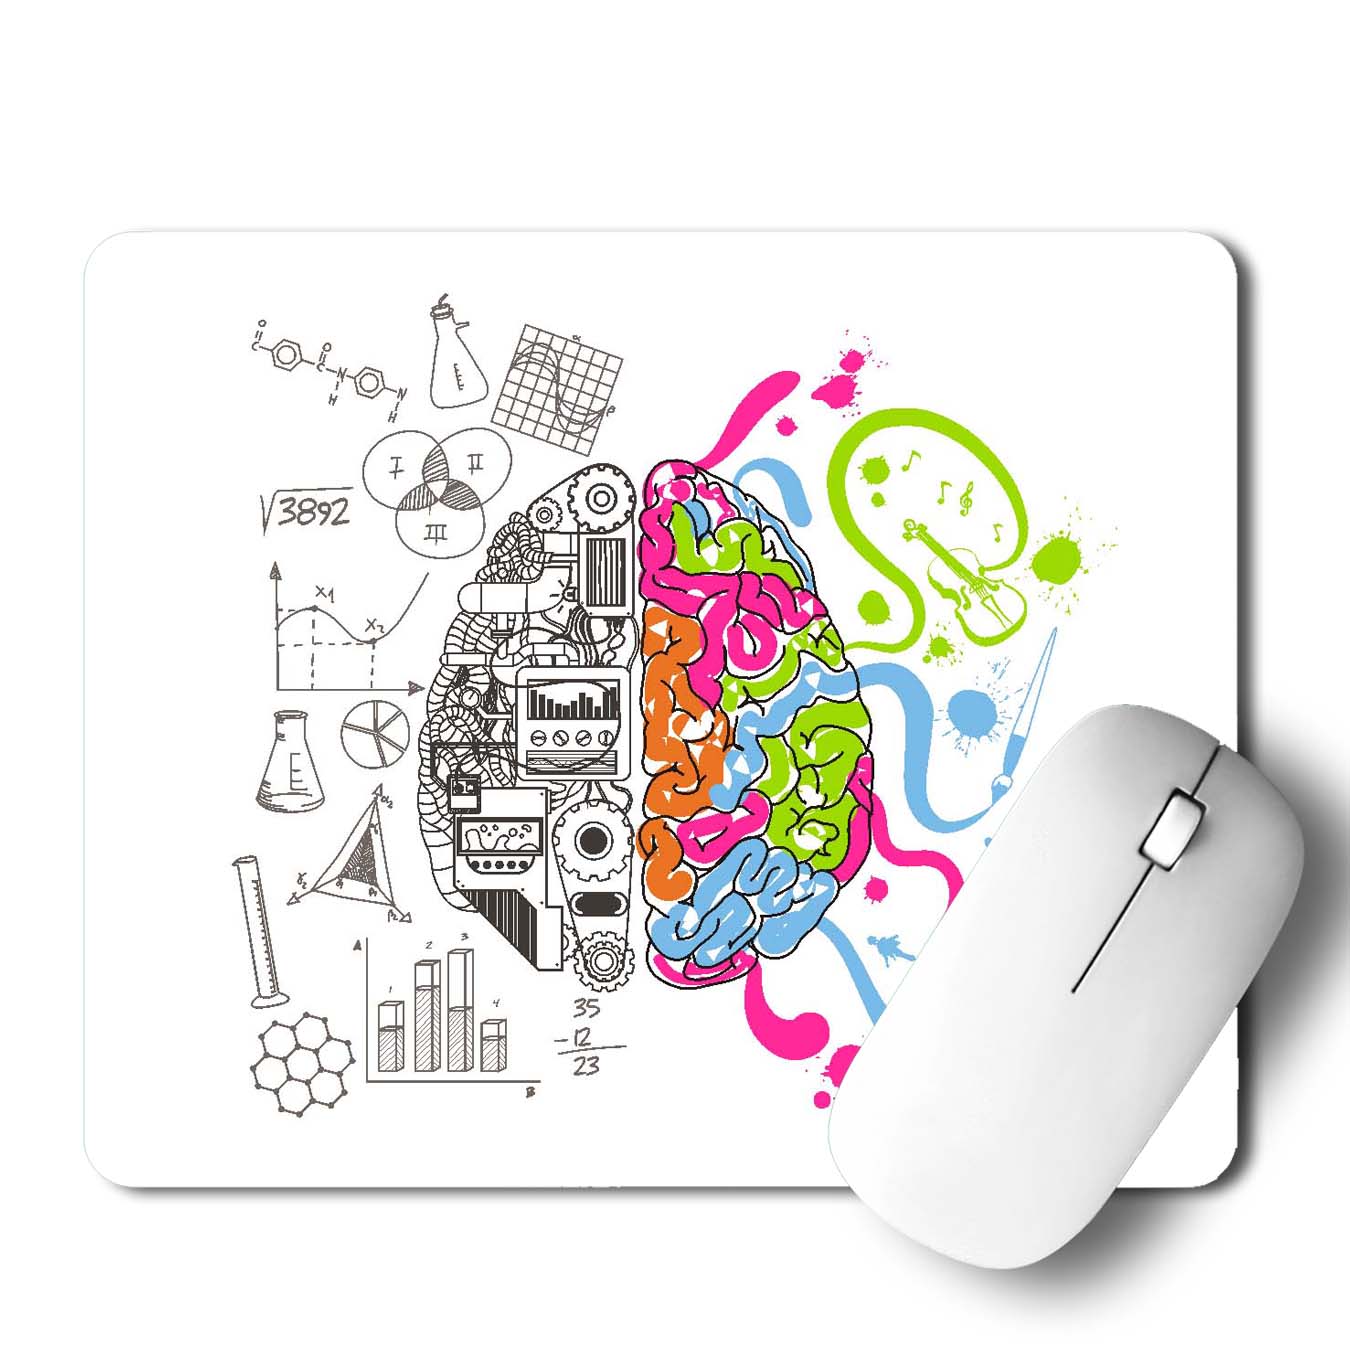 Mind Art & Study Mouse Pad